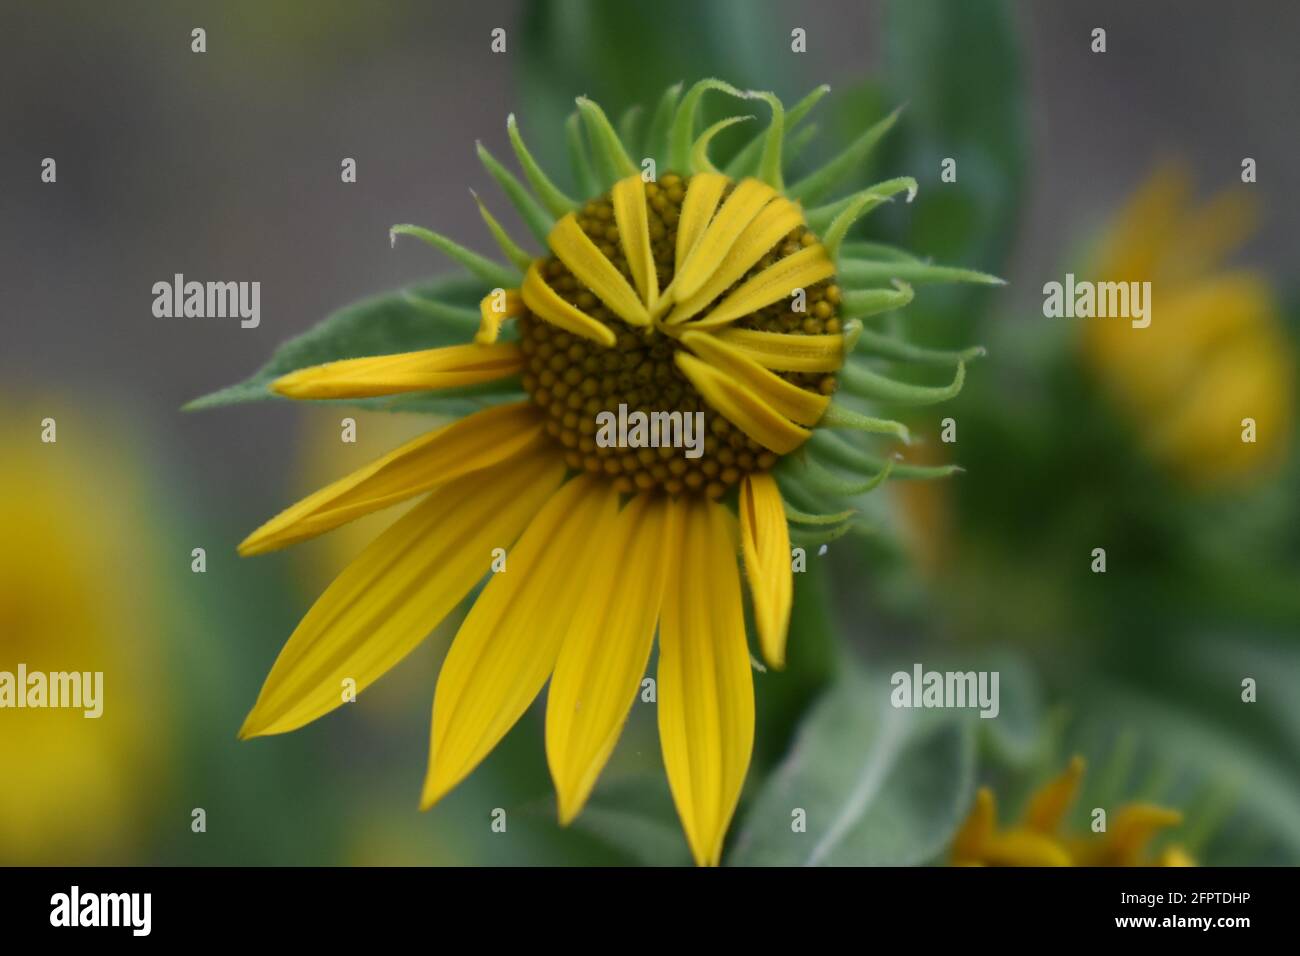 Half closed petals on a sunflower Stock Photo - Alamy